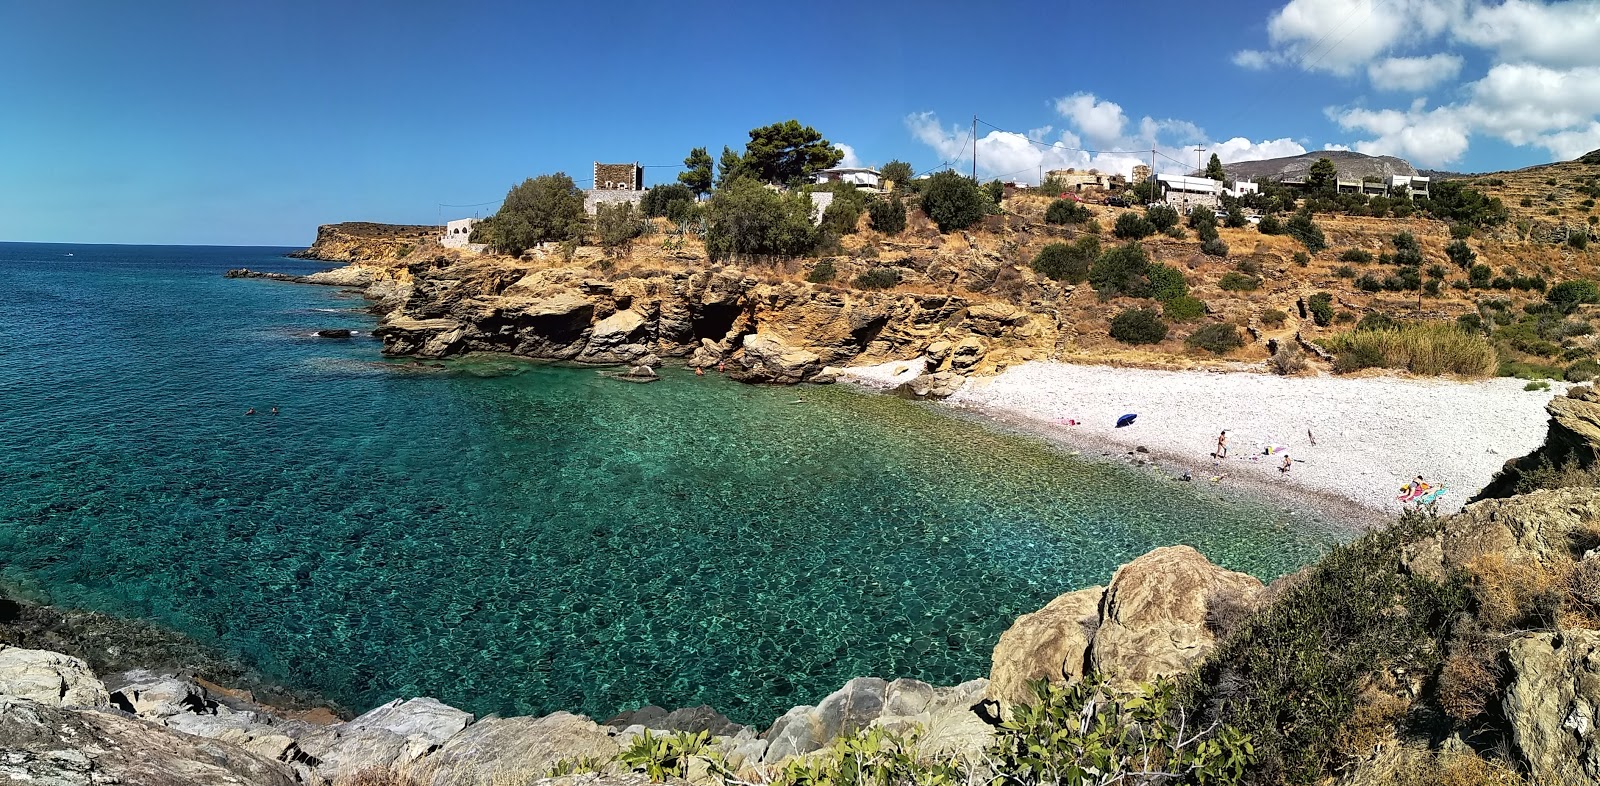 Fotografija Sarolimeni beach z beli kamenček površino